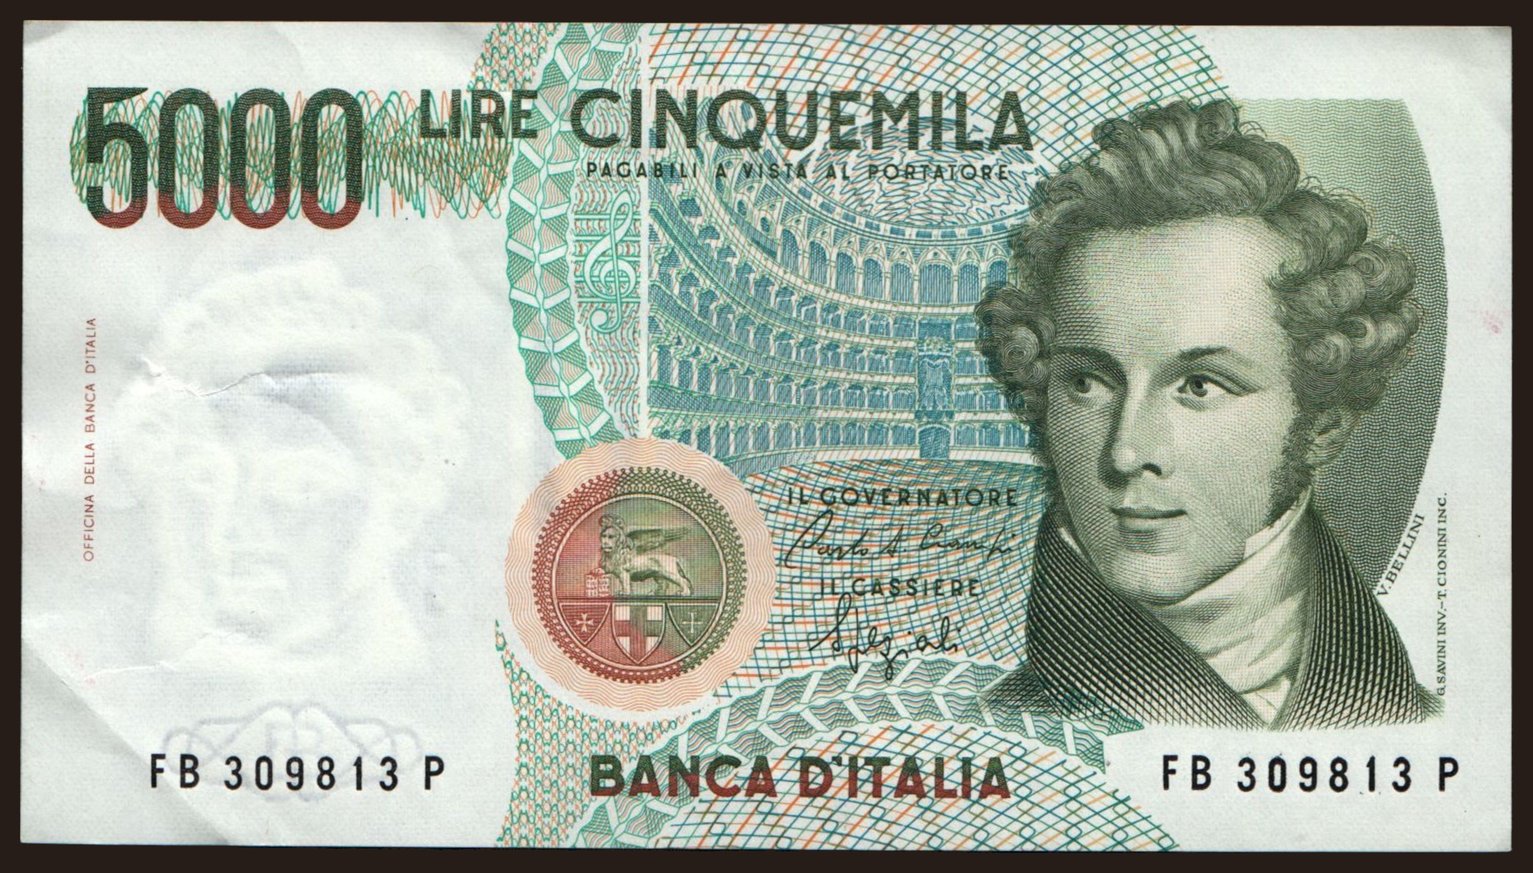 5000 lire, 1988